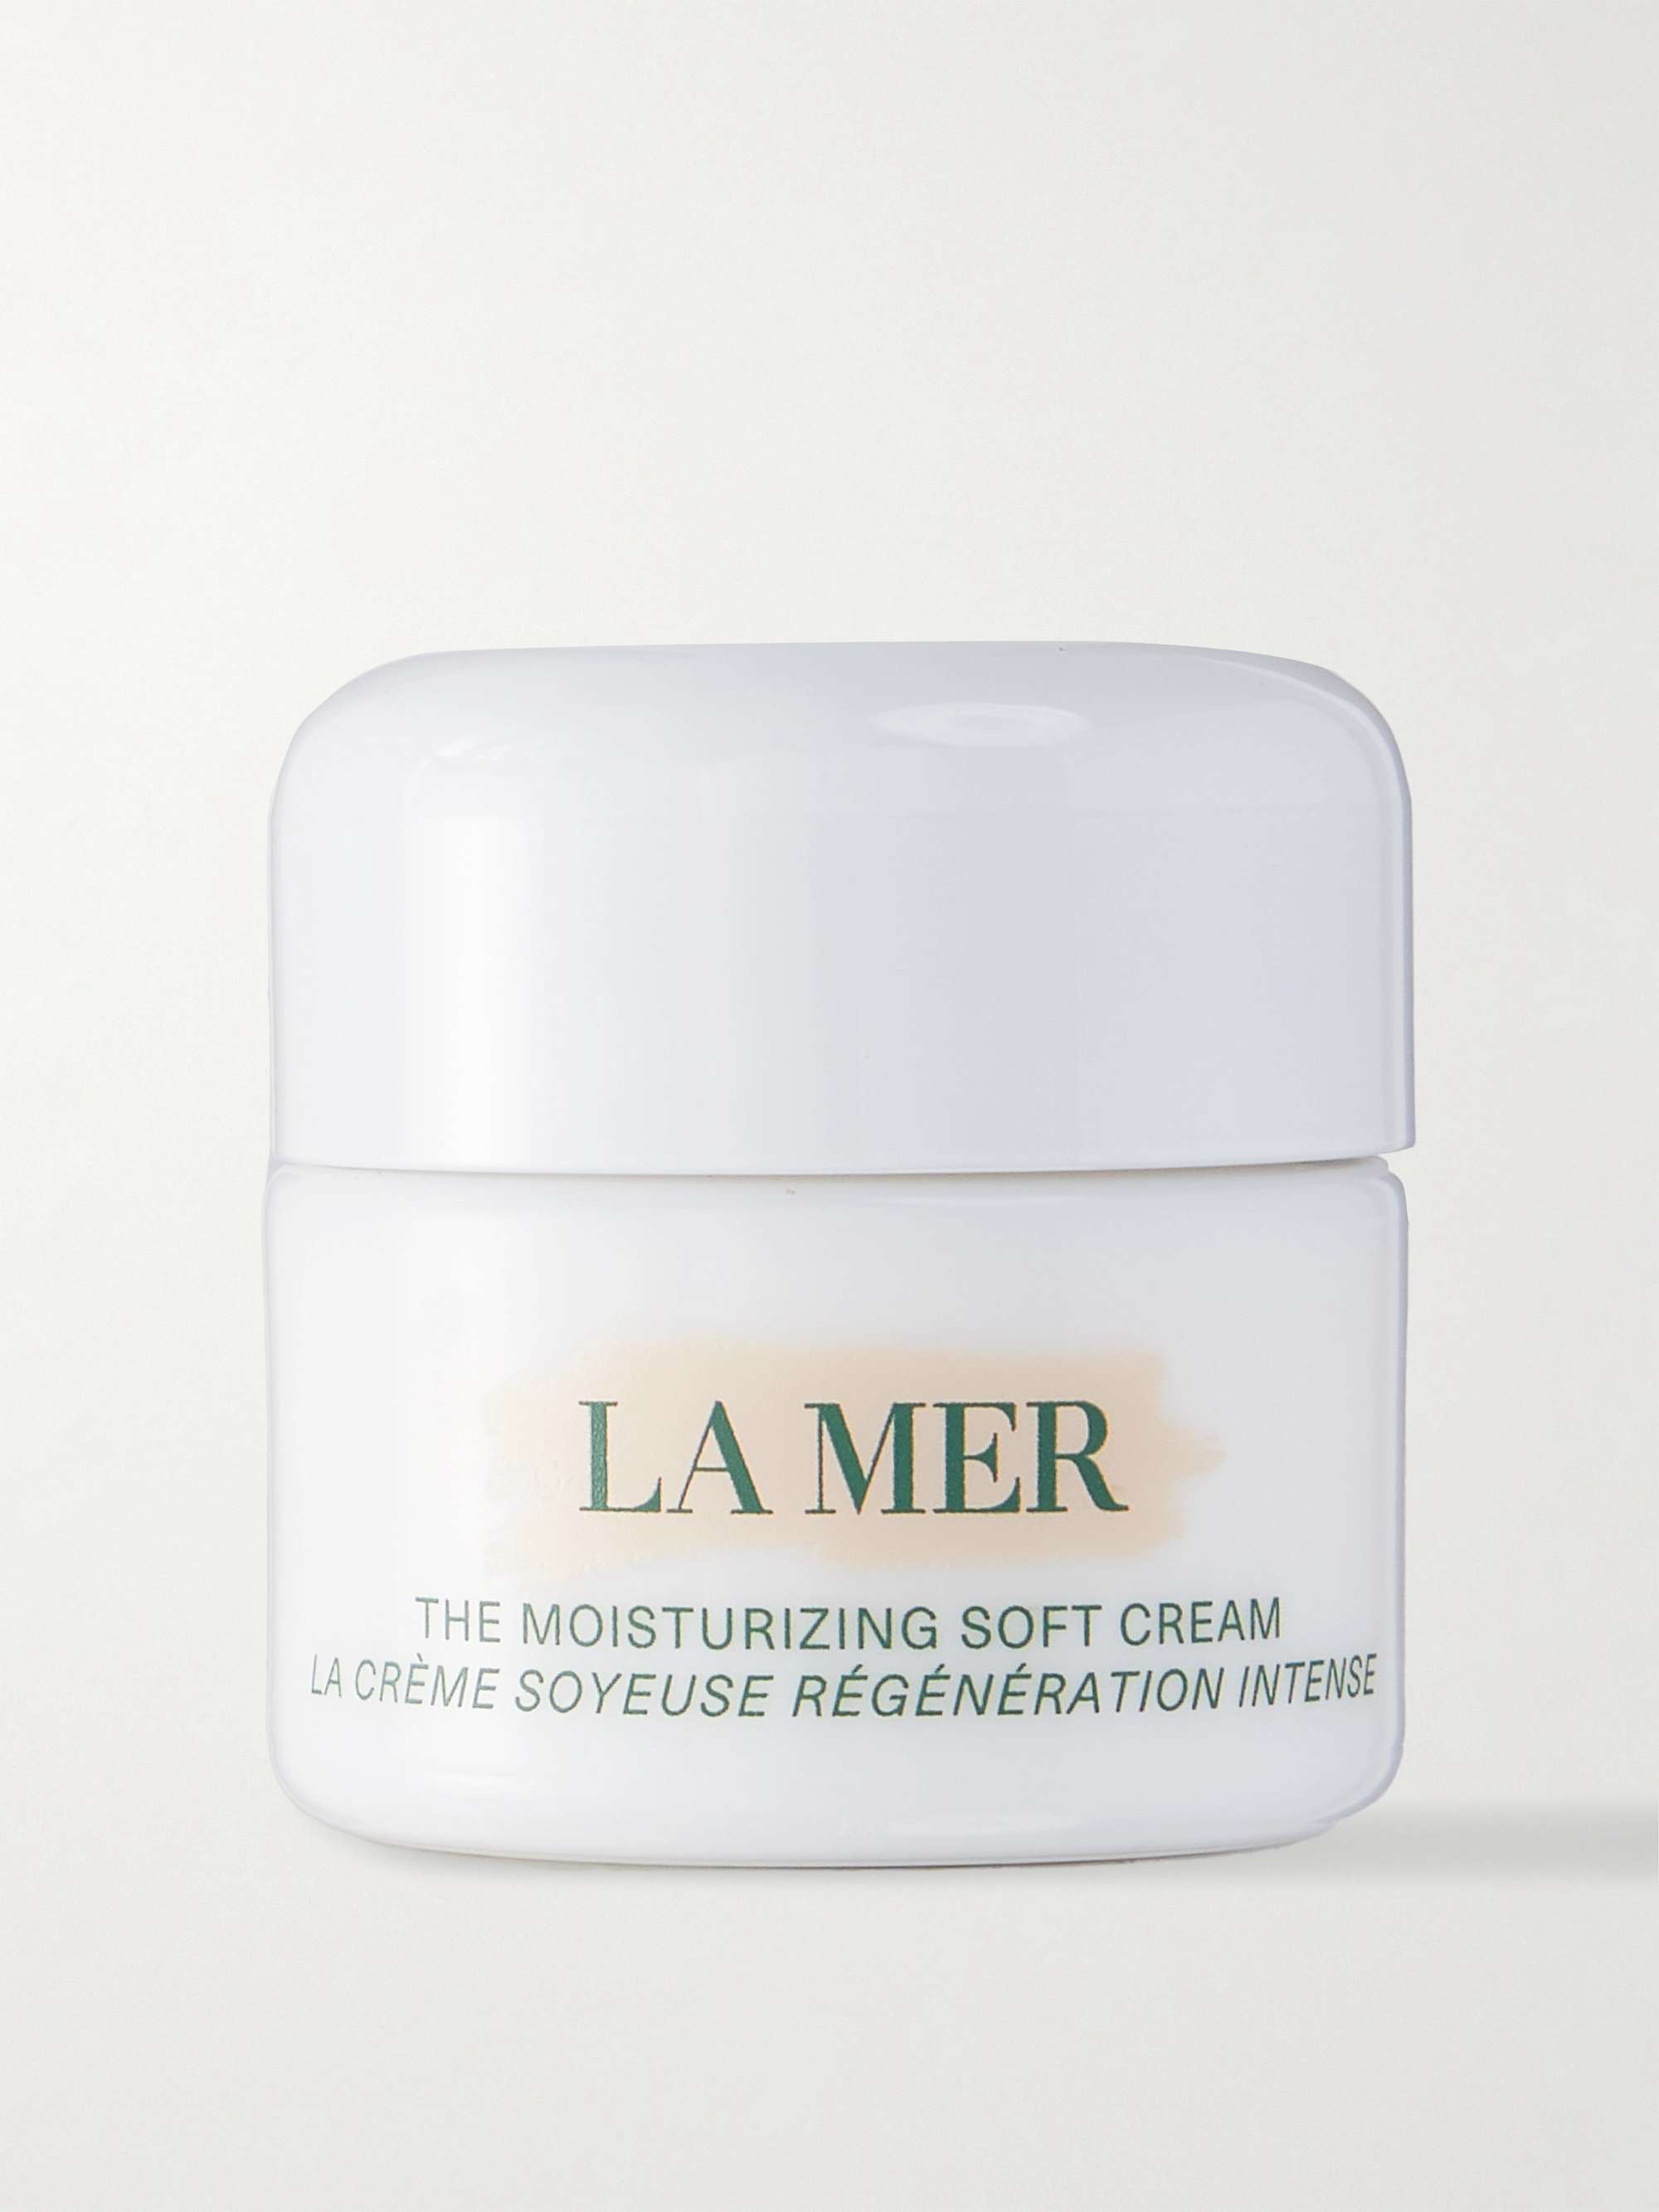 LA MER The Moisturizing Soft Cream, 15ml